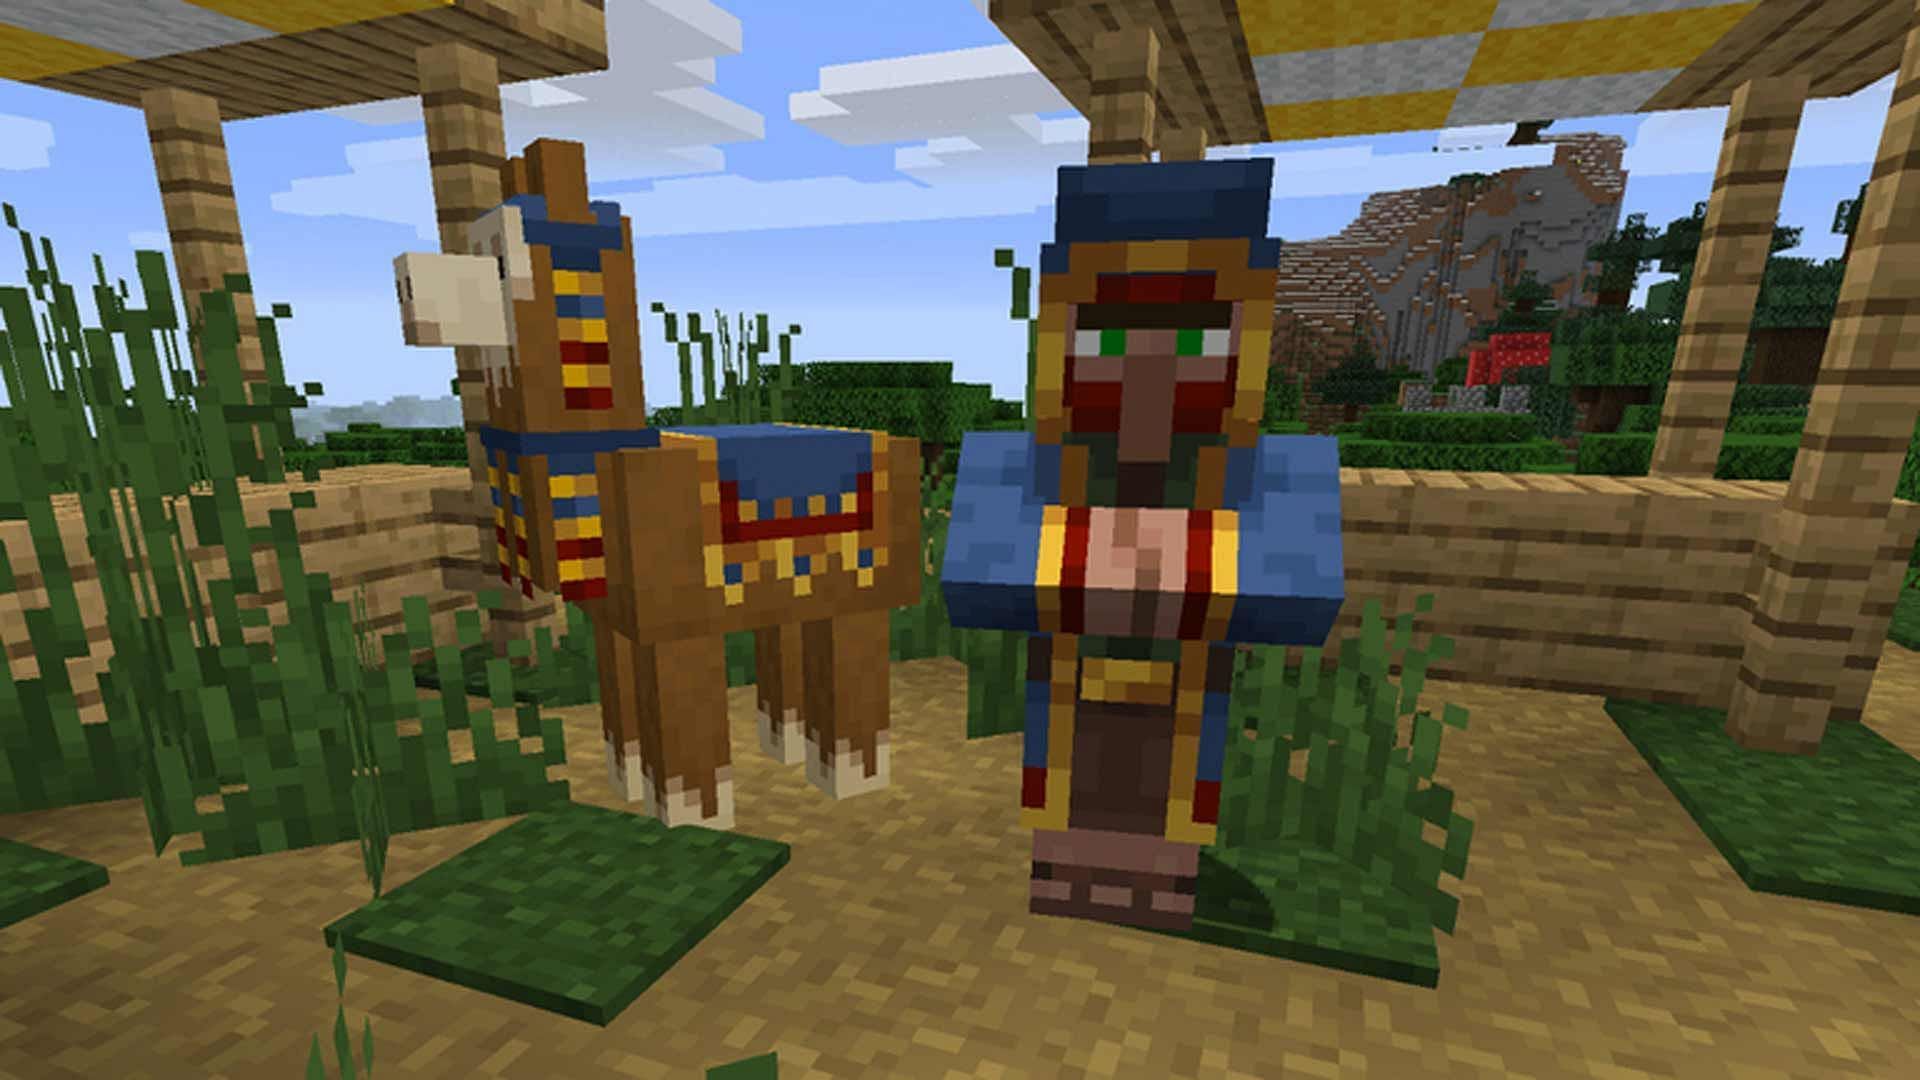 The Wandering Trader in Minecraft (Image via Minecraft)